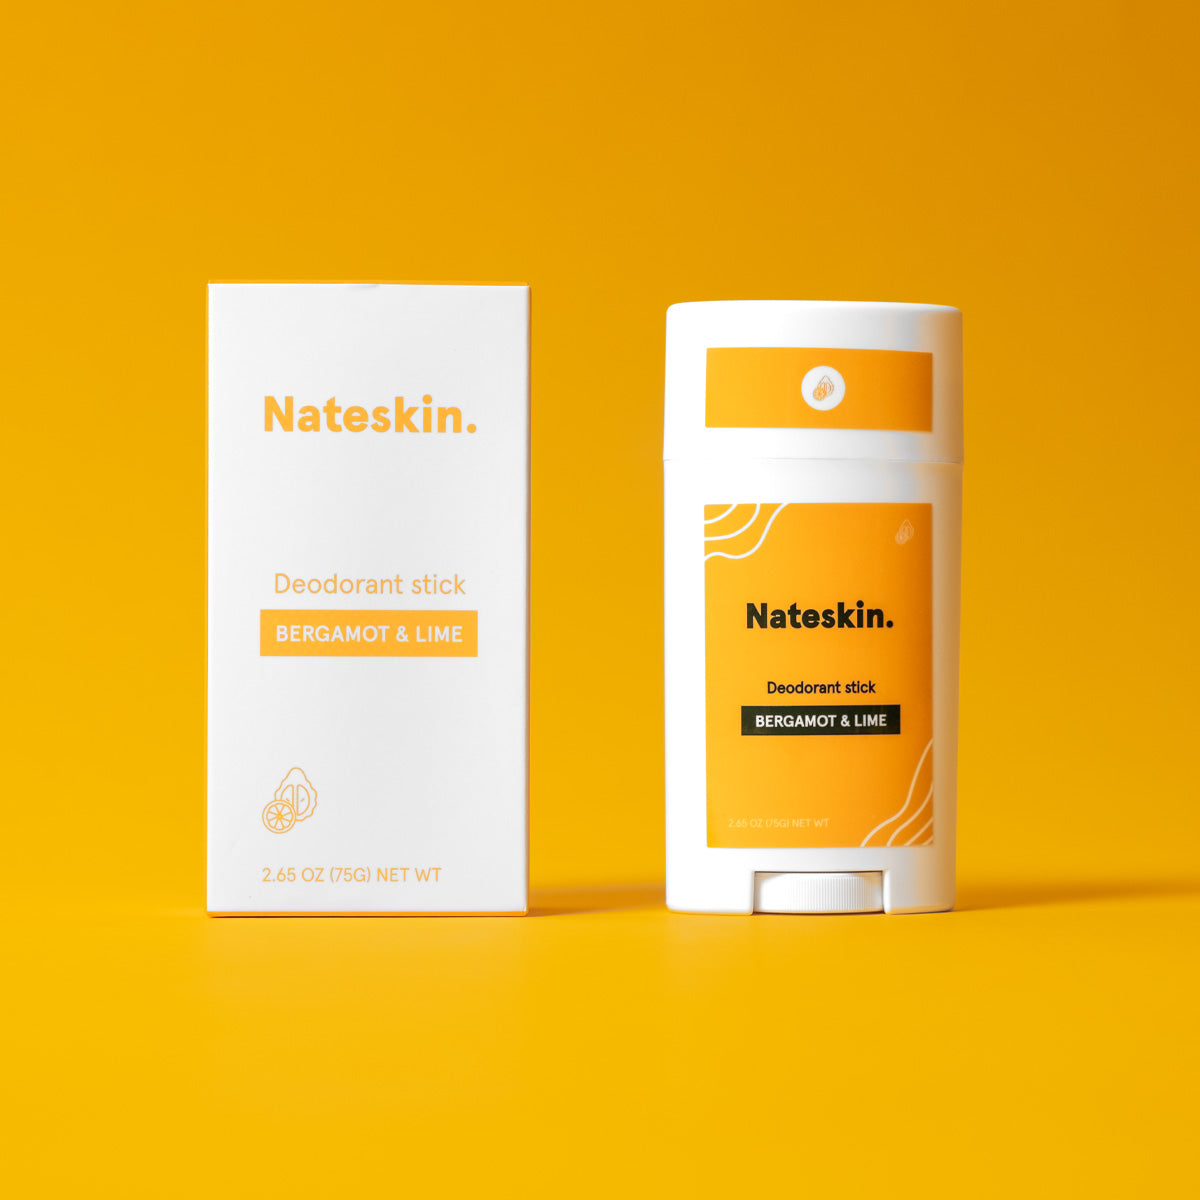 nateskin natural deodorant bergamot and lime variant